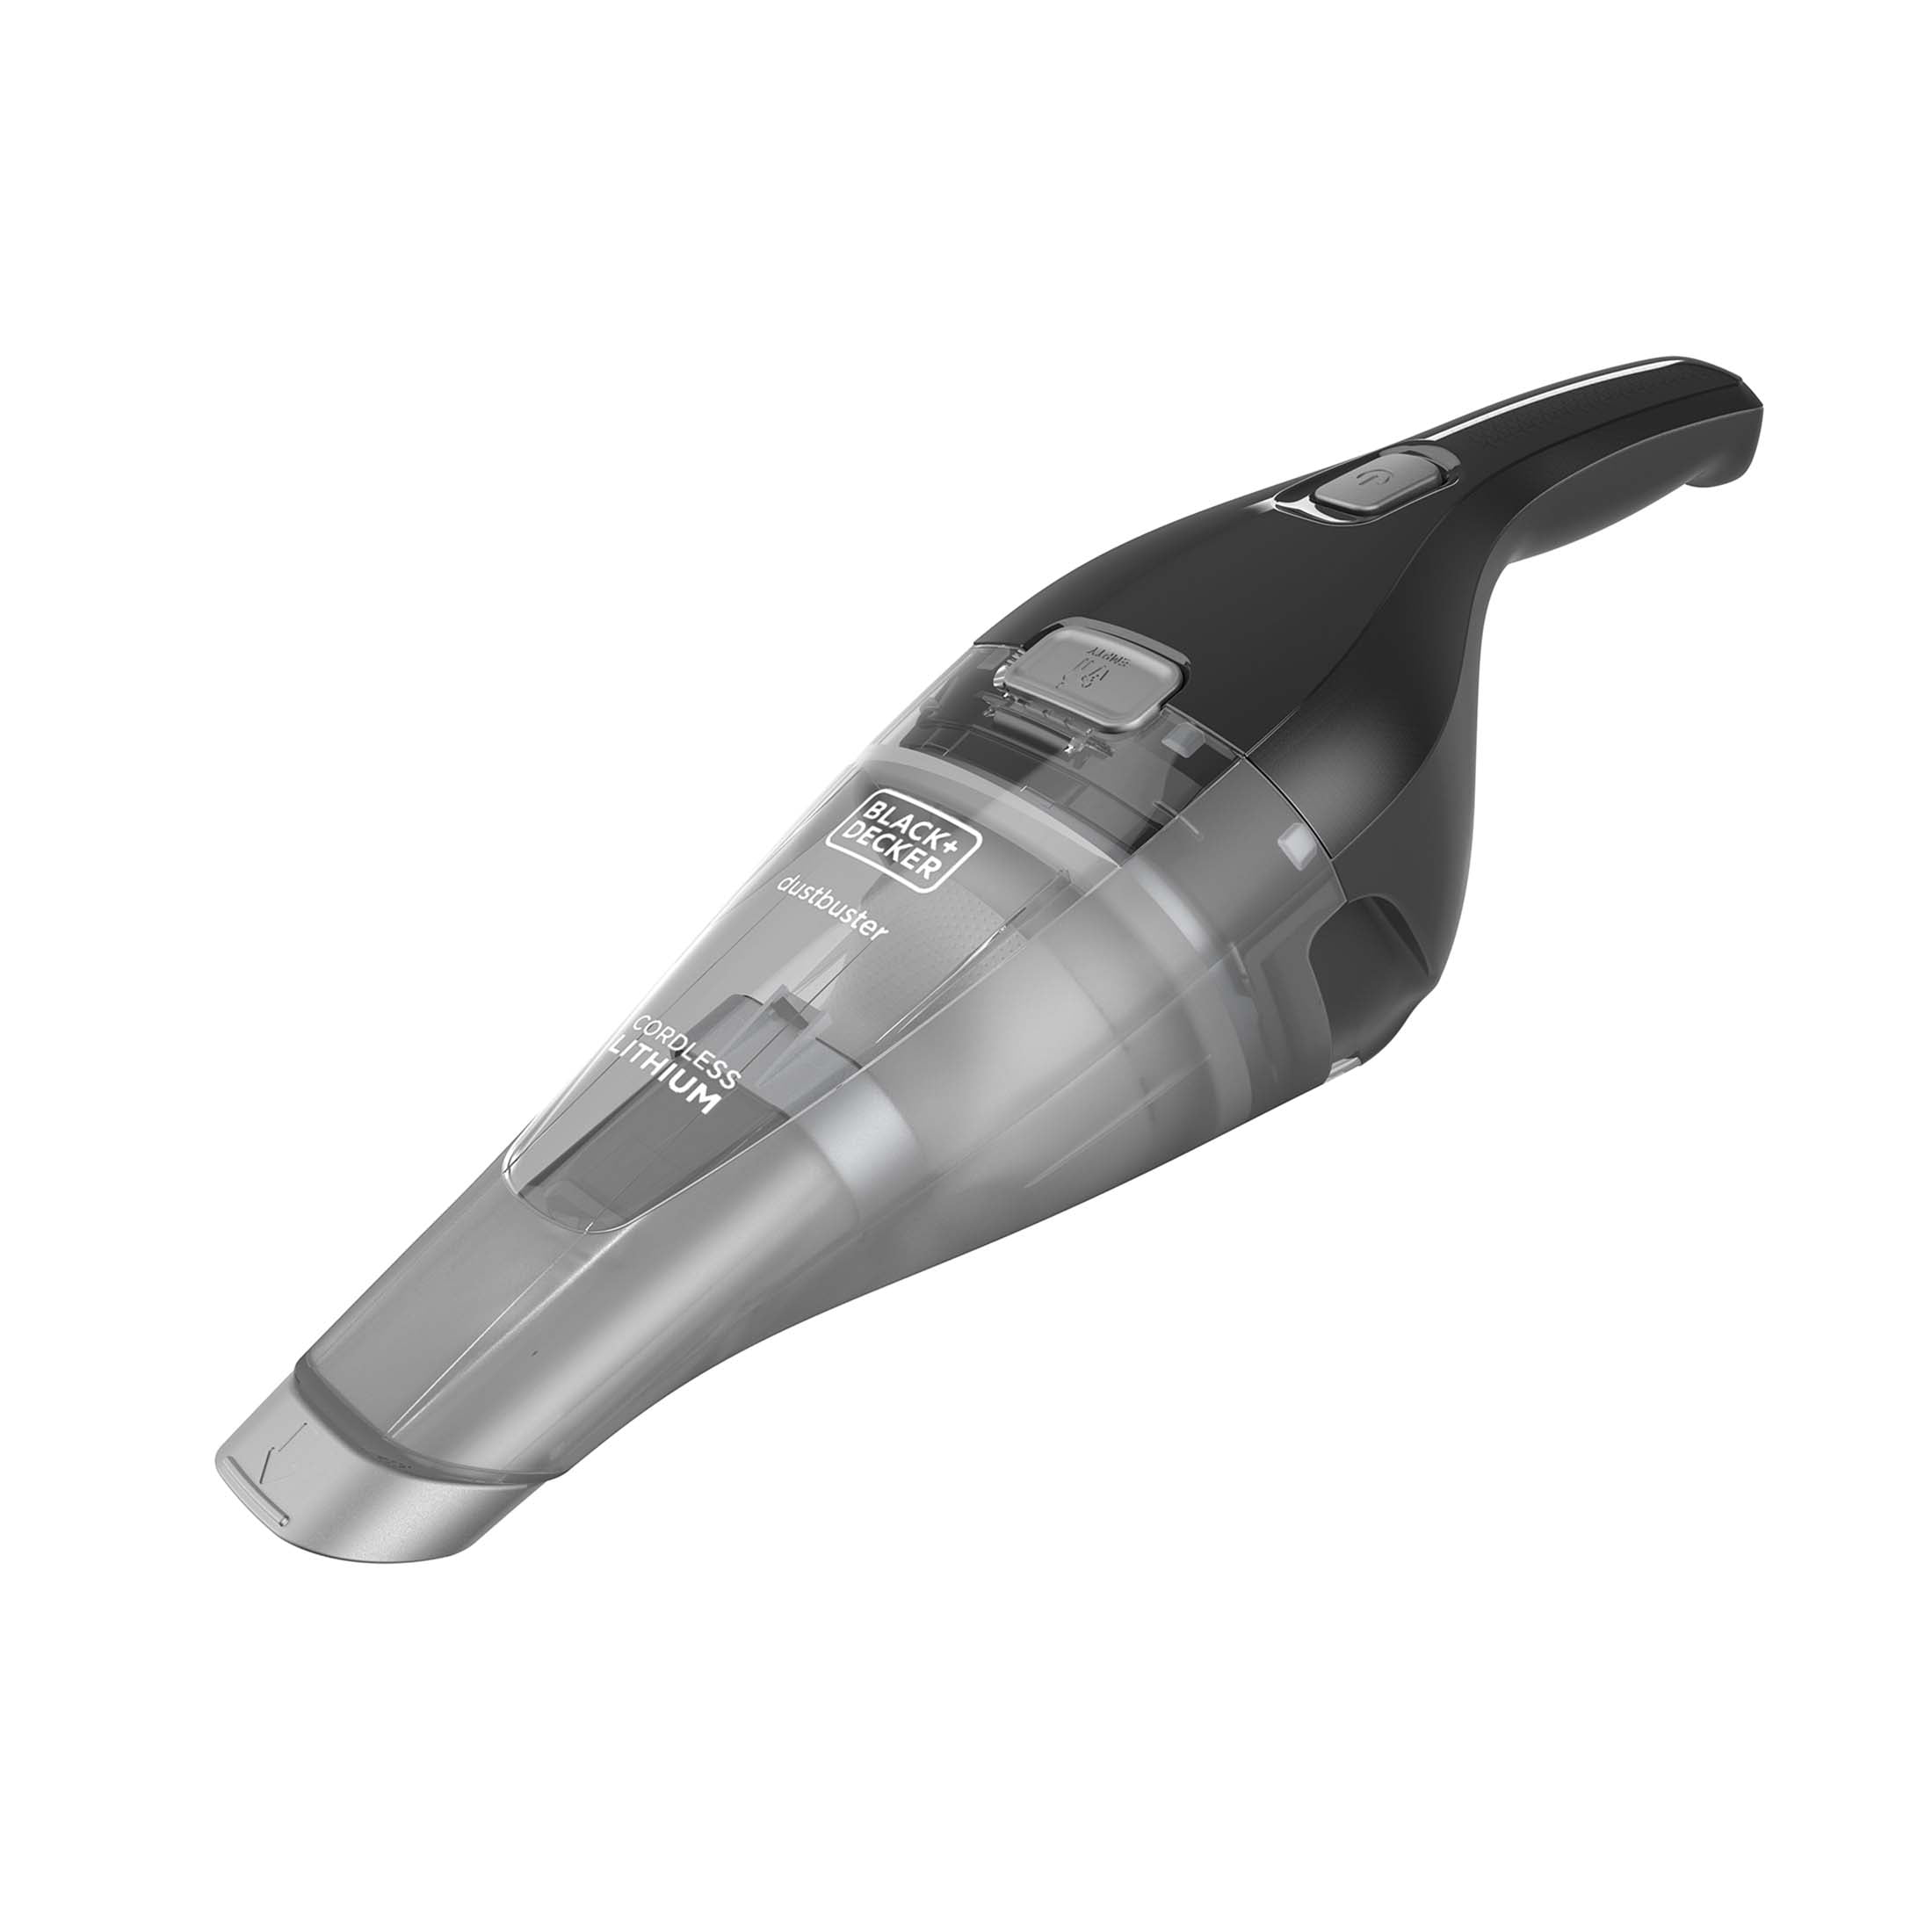 Black+decker HWVI220J52 Dustbuster Wet/Dry Cordless Lithium Hand Vacuum